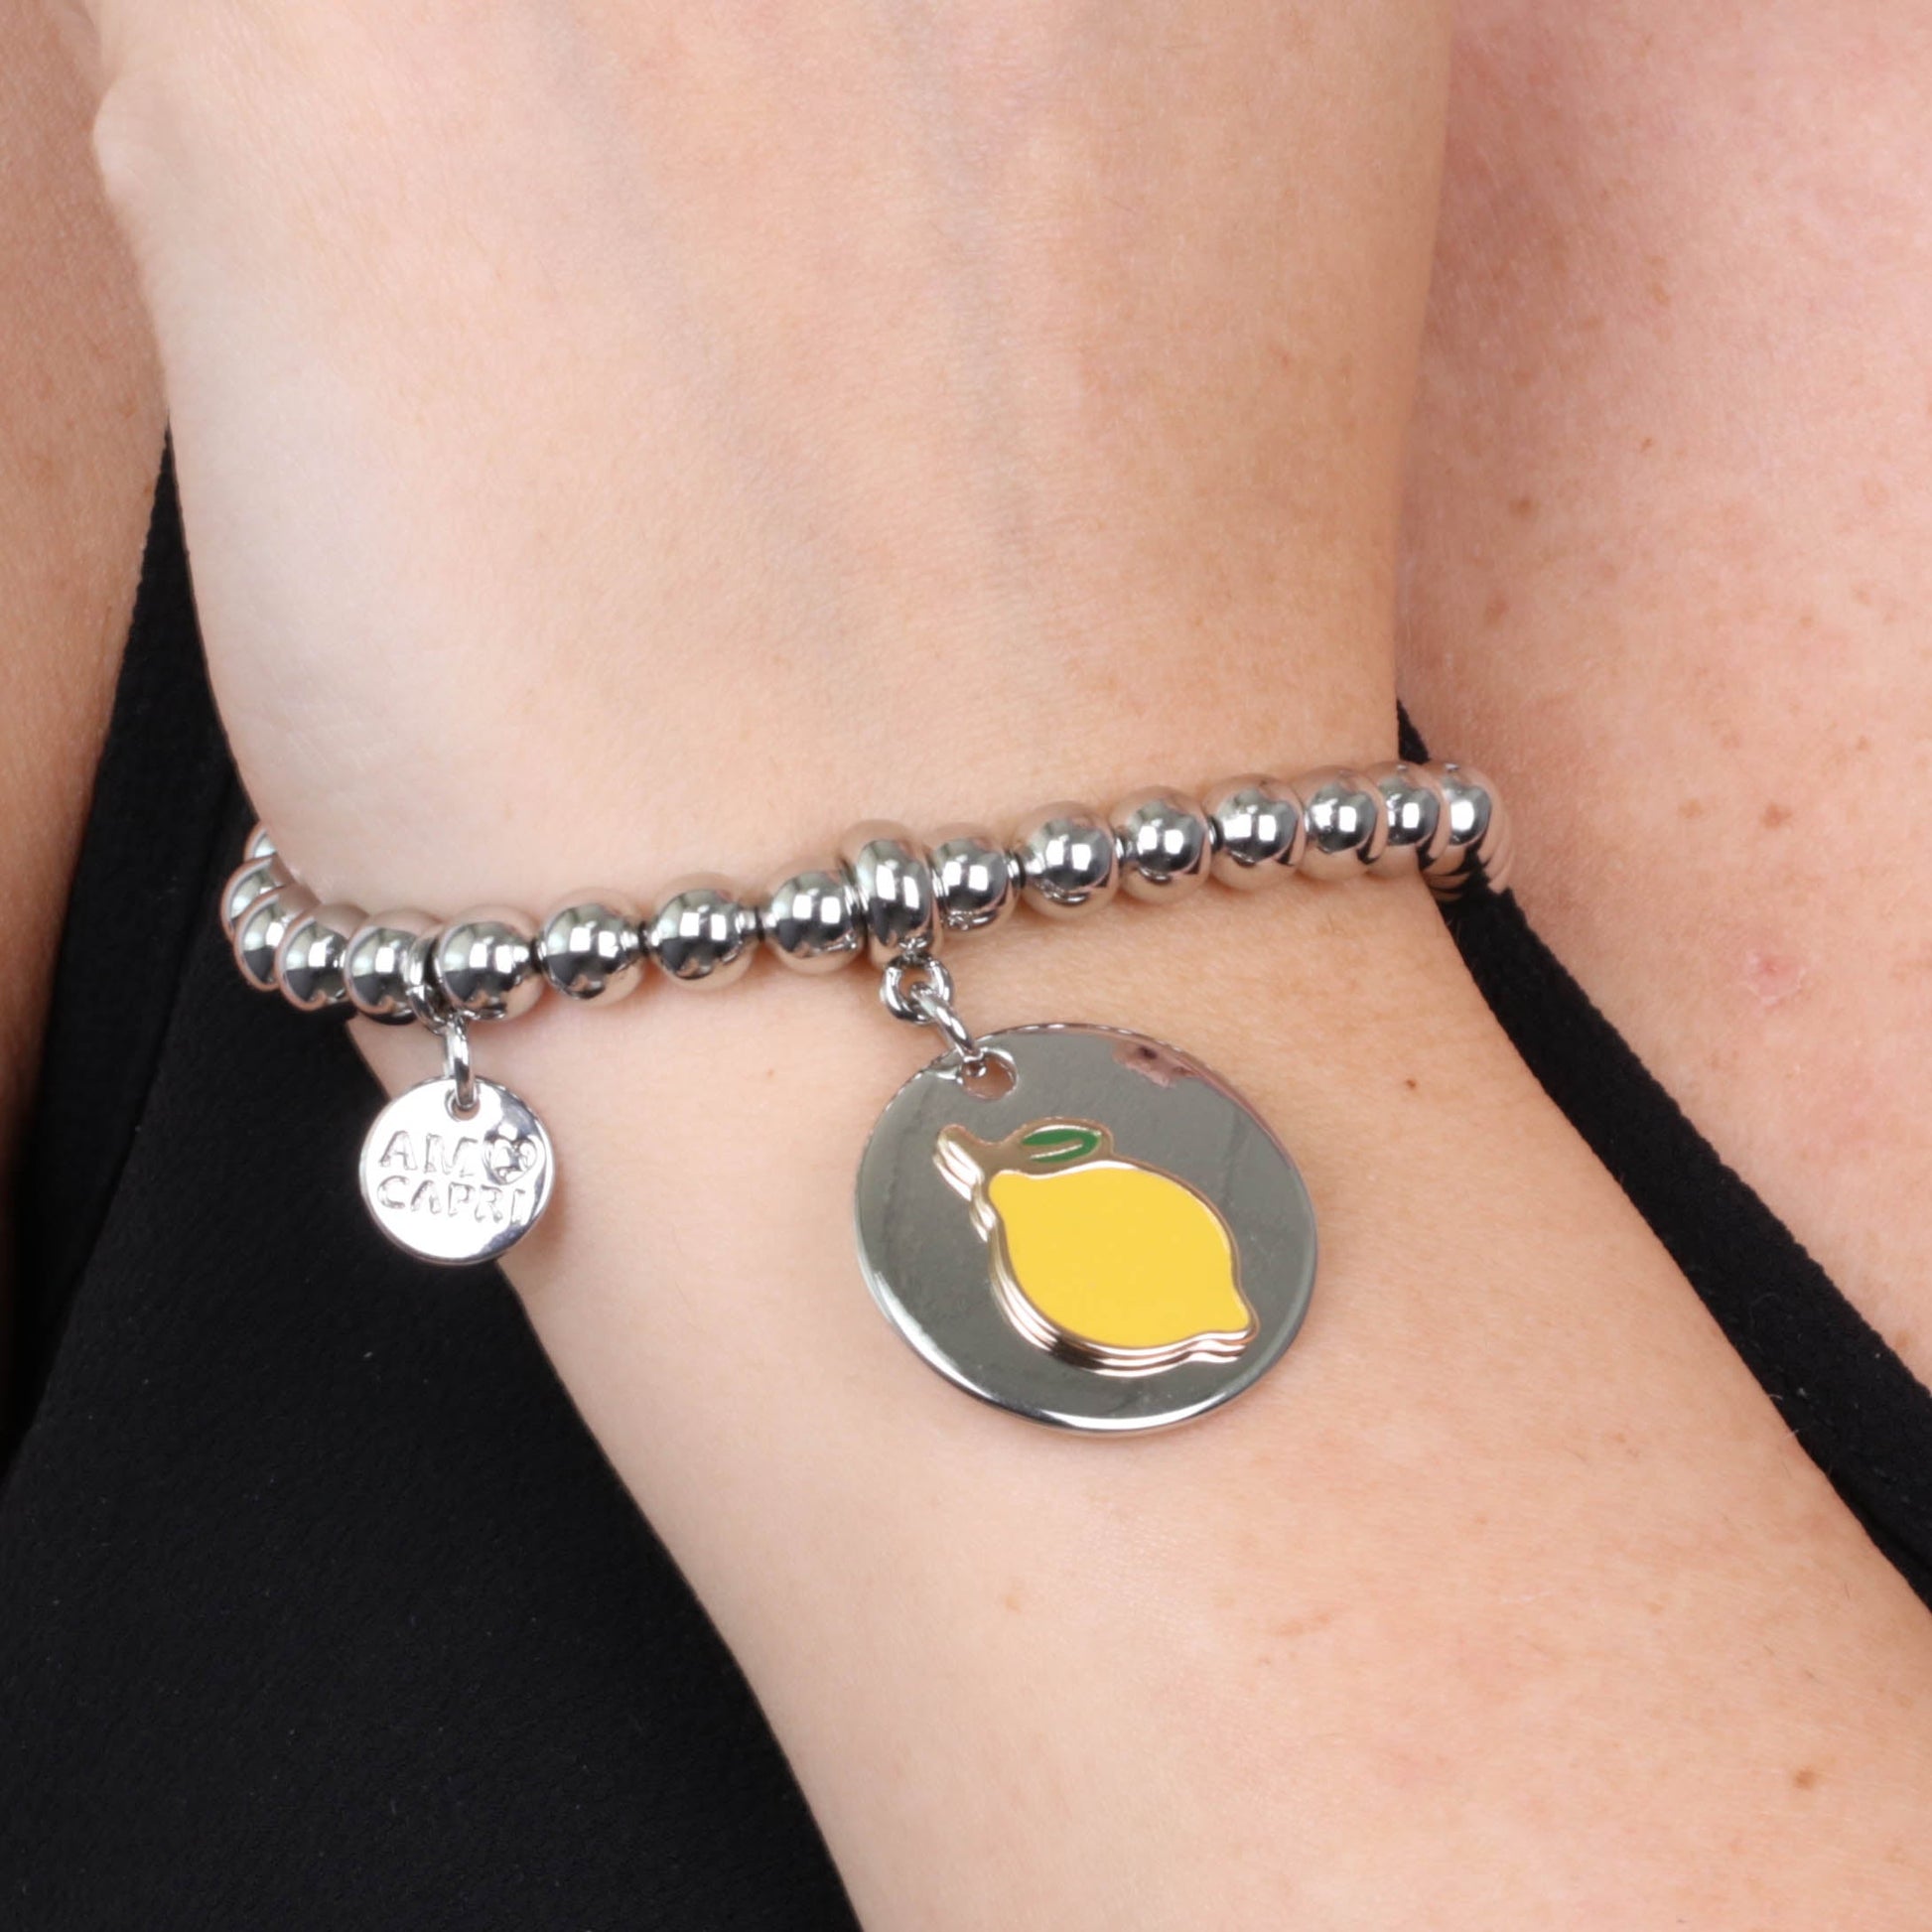 Metal bracelet spheres, with a lemon symbol medallion with colored glazes